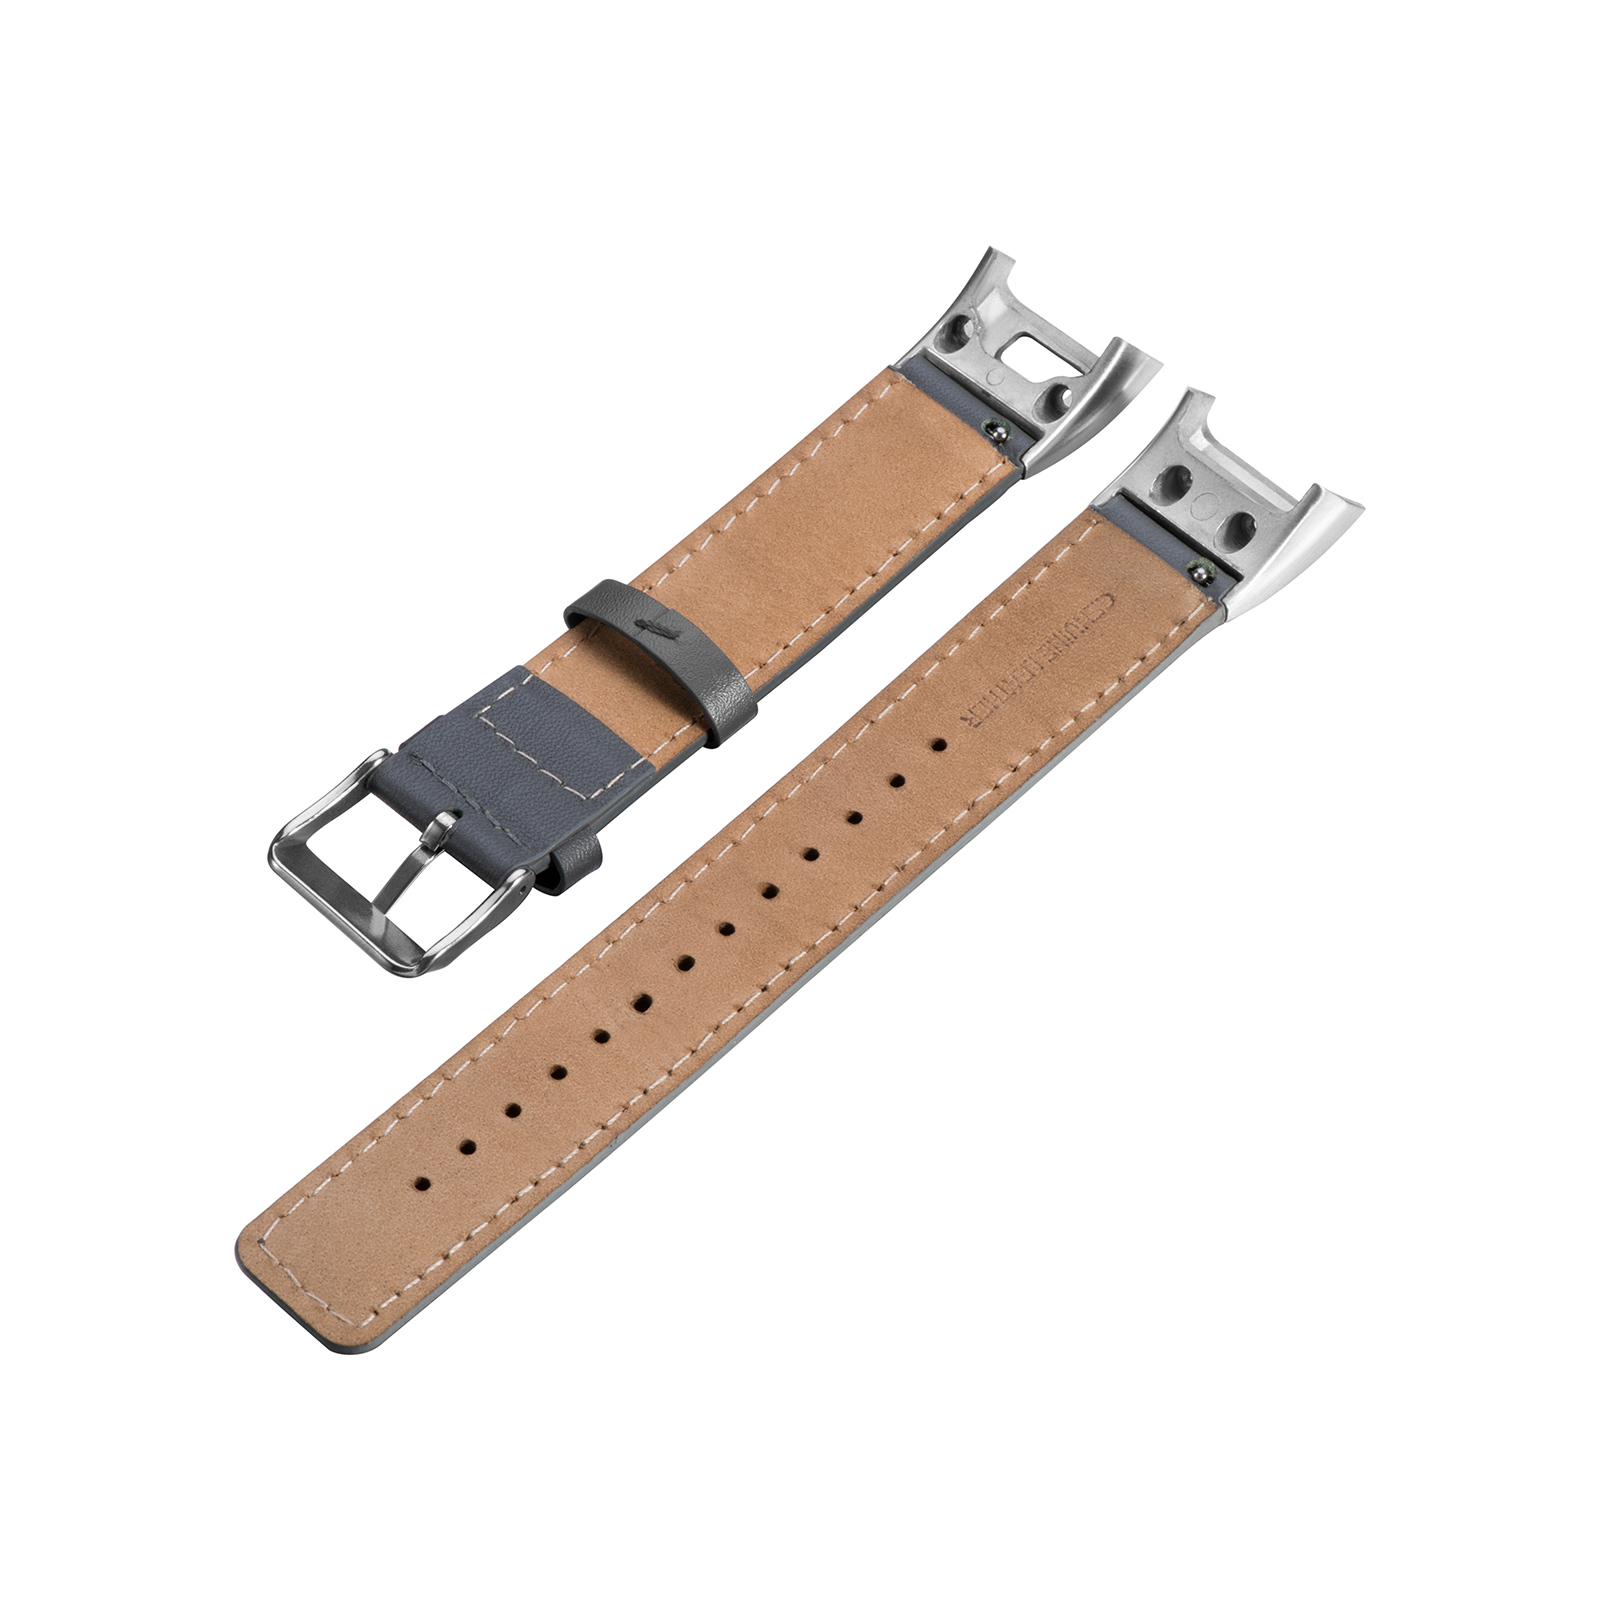 Bakeey-Retro-Metal-Buckle-Leather-Strap-Smart-Watch-Band-For-Garmin-Vivosmart-HR-1739351-8